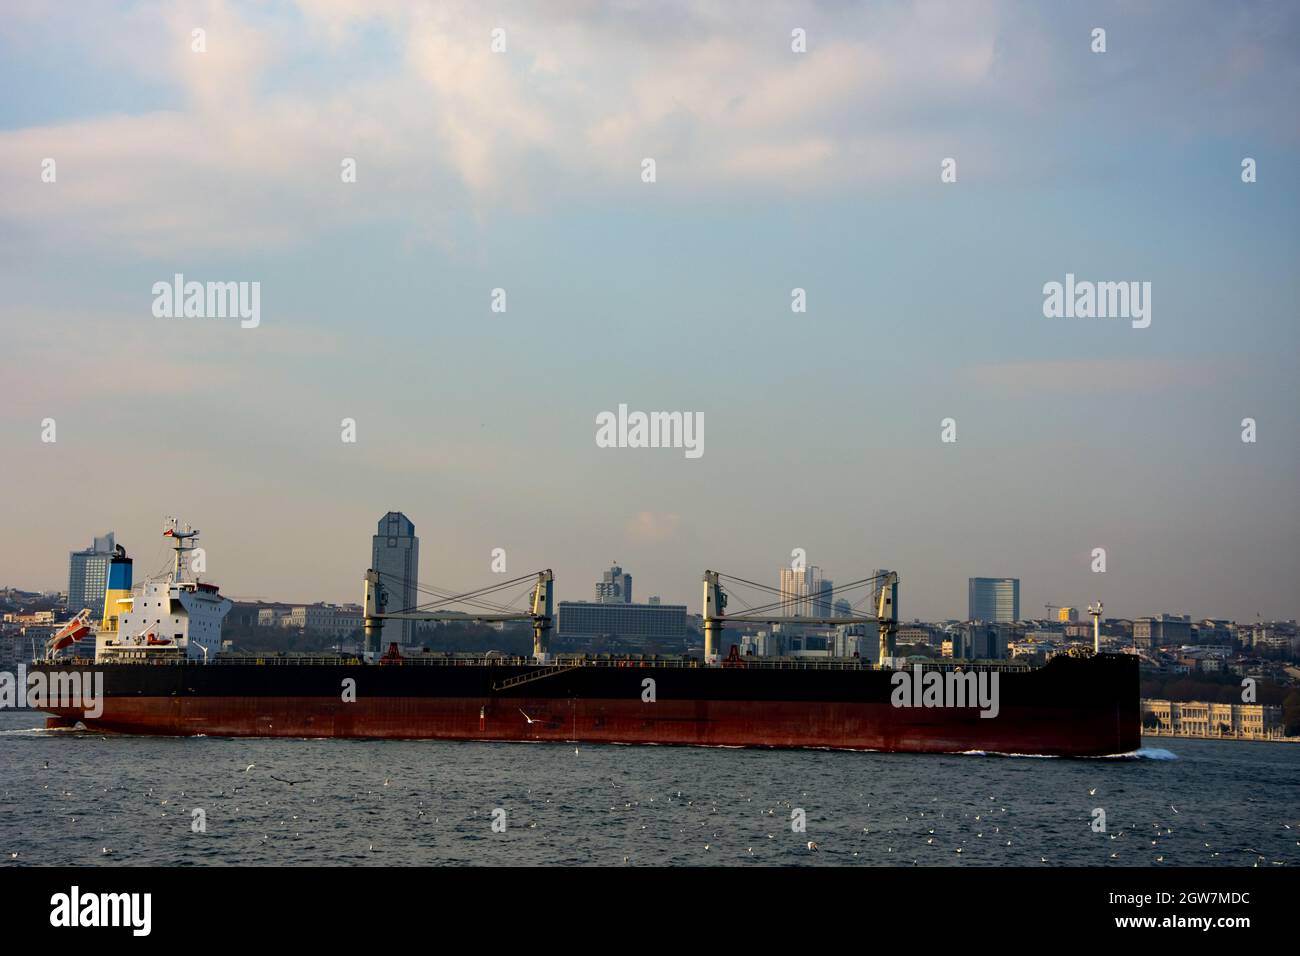 View Of Oil Tanker In Sea Stock Photo